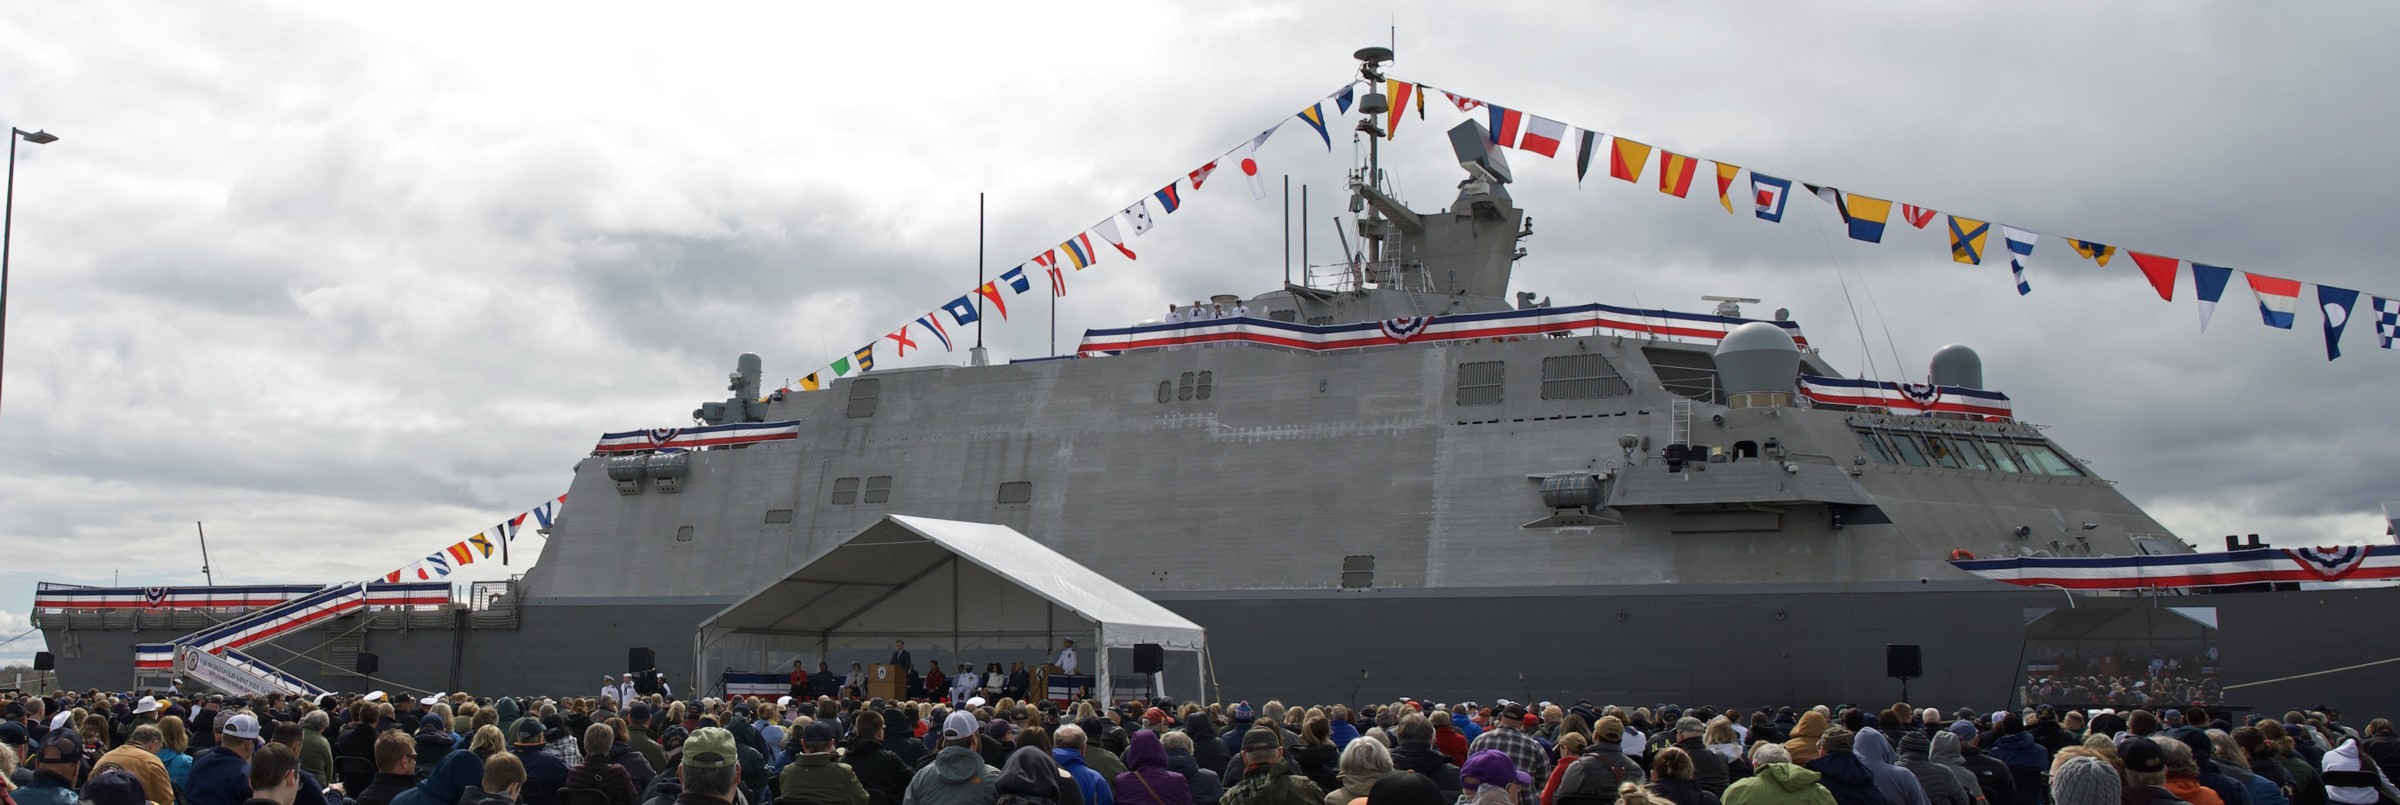 lcs-21 uss minneapolis saint paul freedom class littoral combat ship us navy 23 commissioning ceremony duluth minnesota